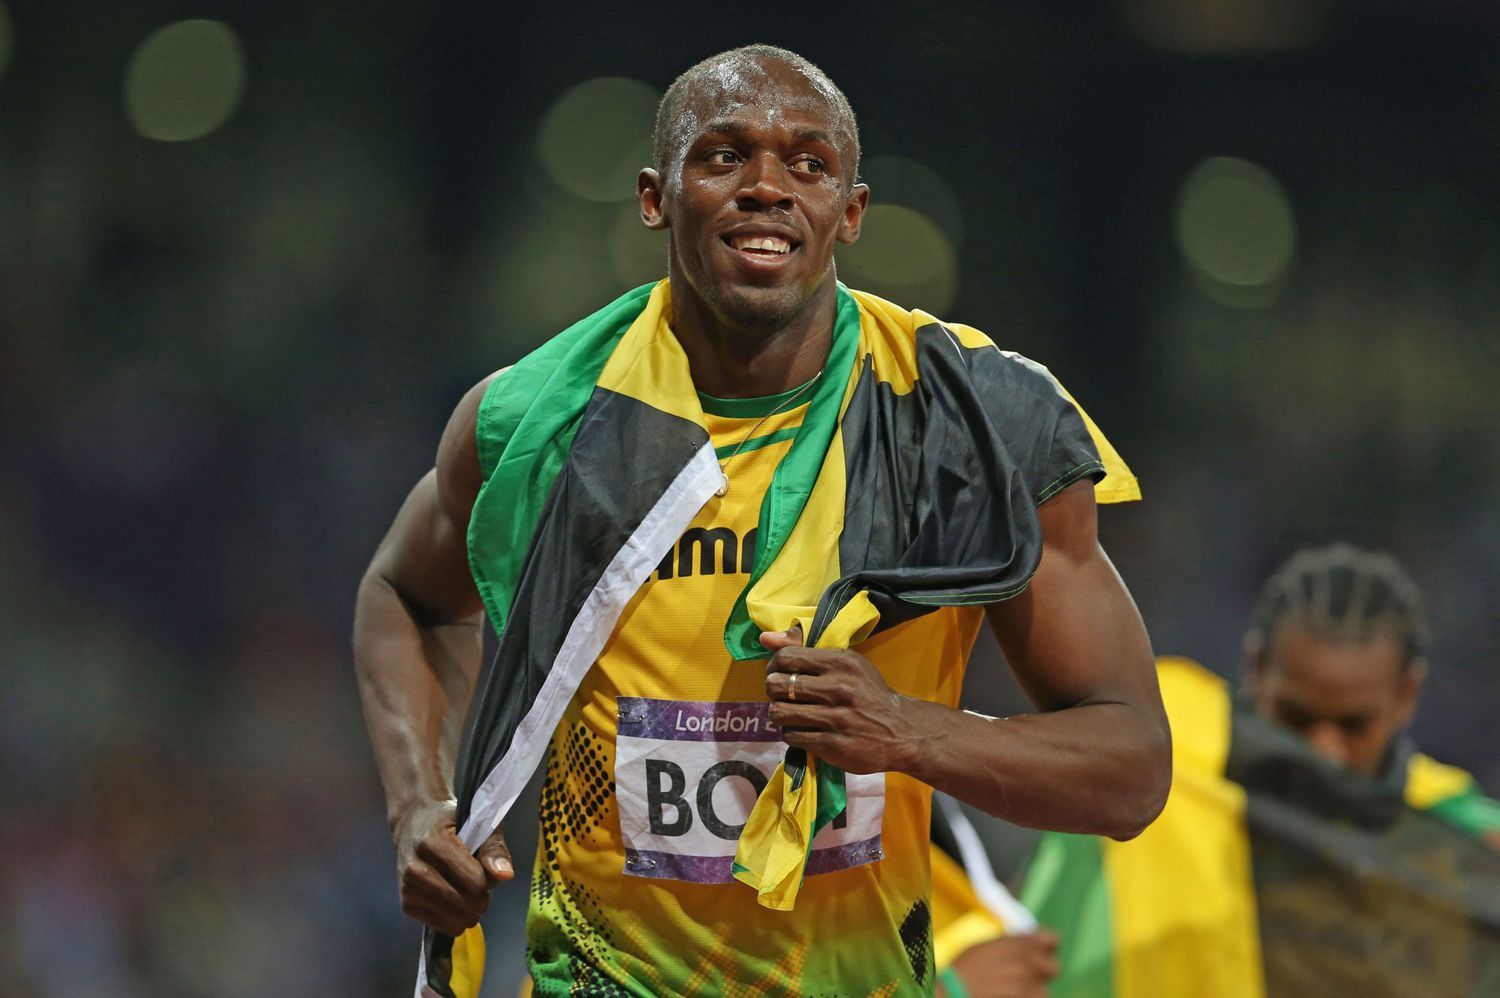 Usain Bolt: How the world's fastest man built a business empire